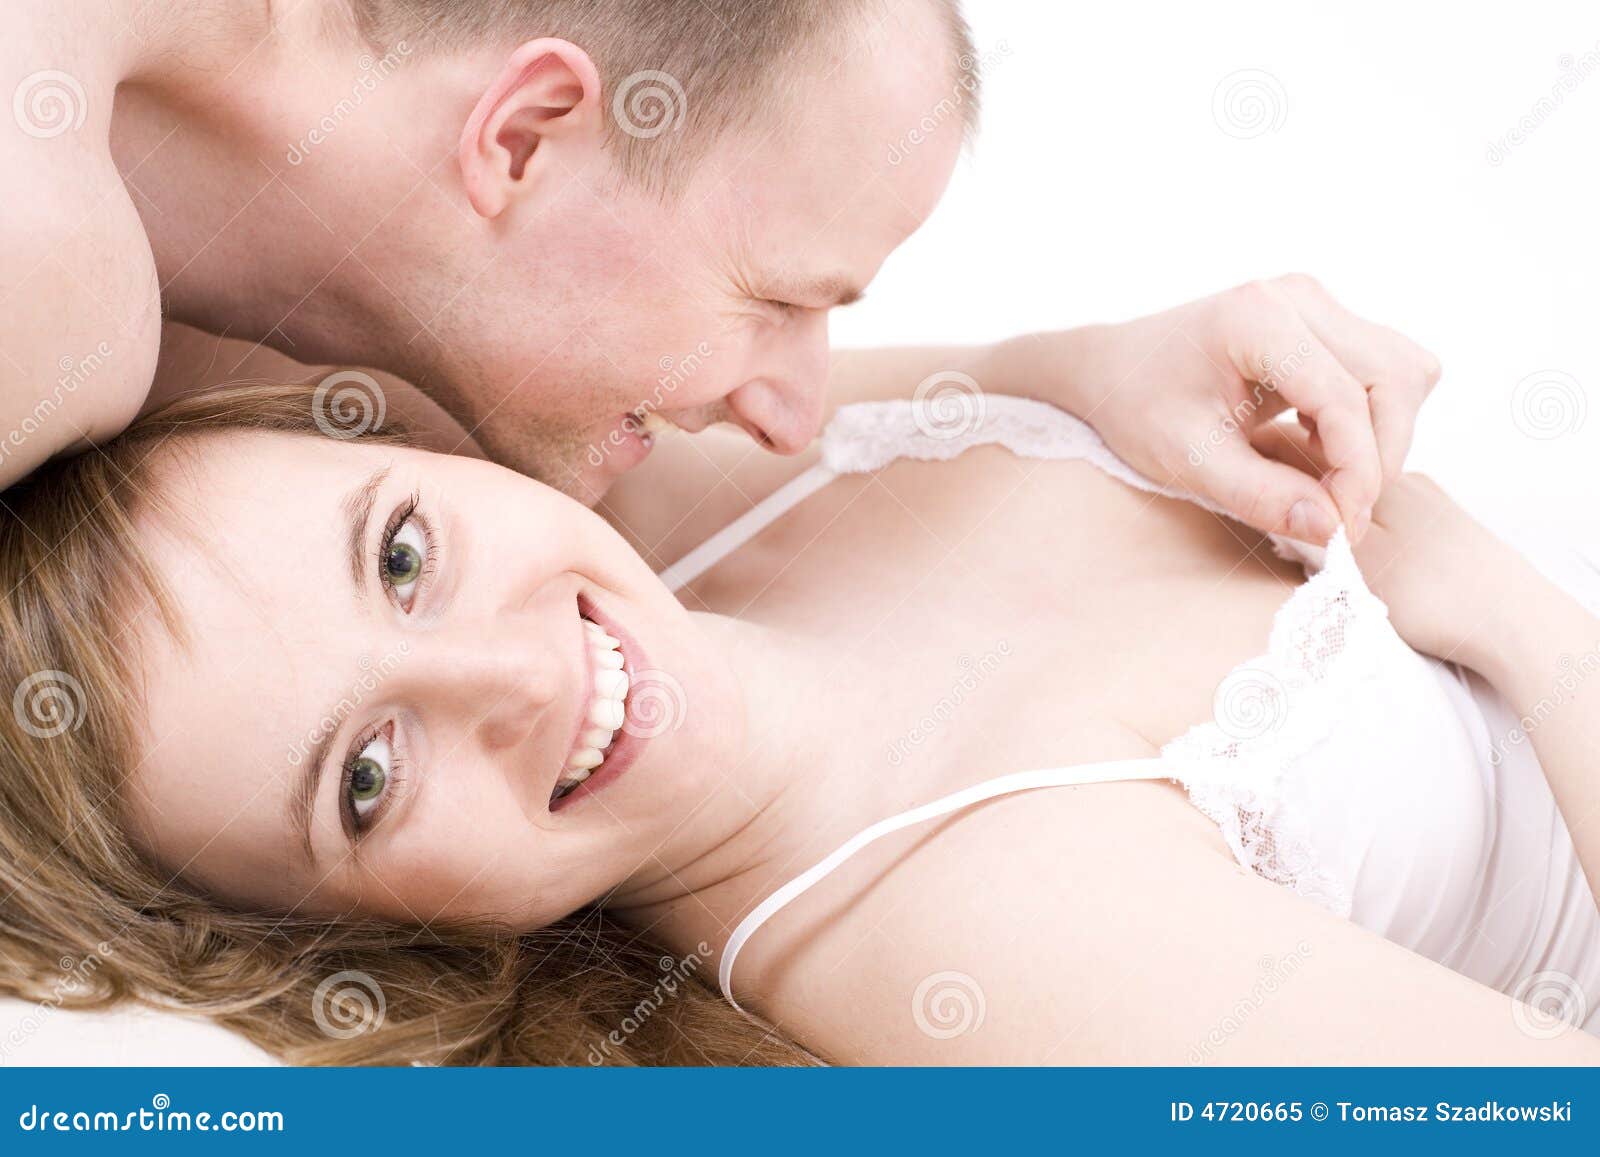 фото мужчина сосет грудь женщины фото фото 50